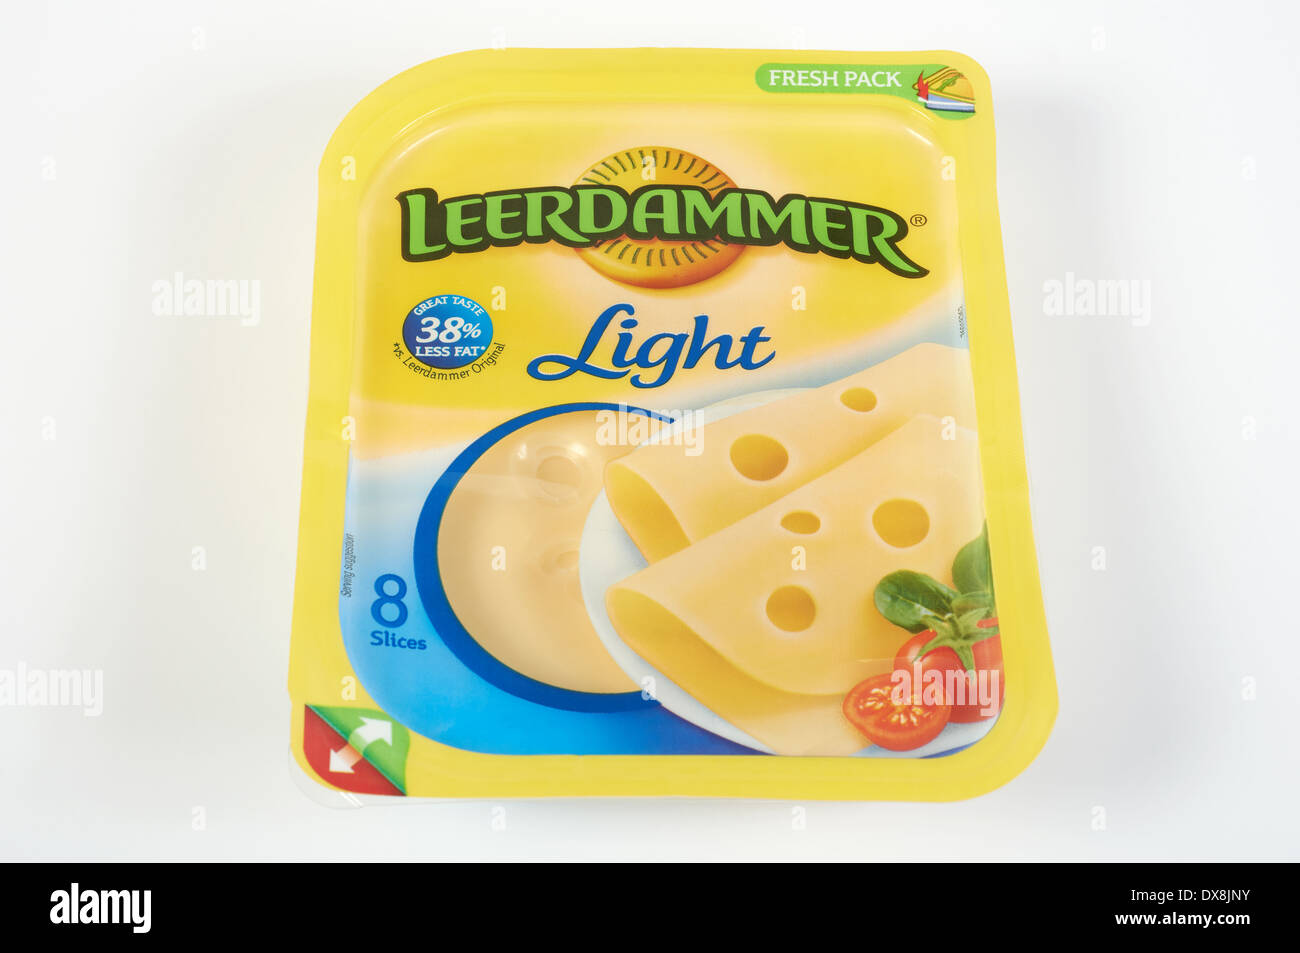 Leerdammer cheese light 8 slice pack Stock Photo - Alamy